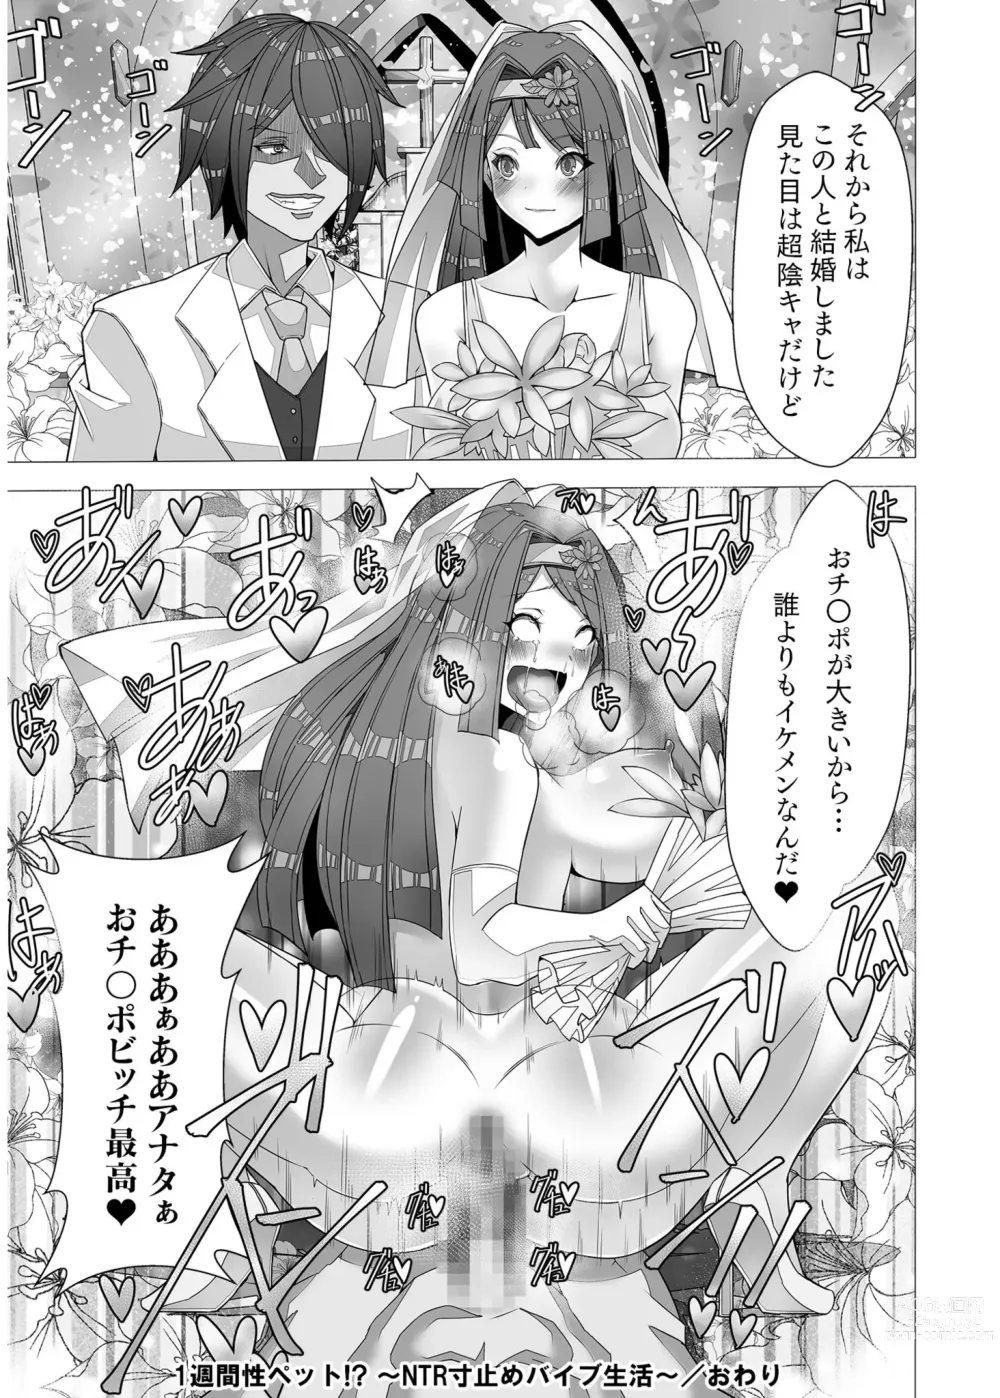 Page 440 of manga COMIC SPLINE Vol.2